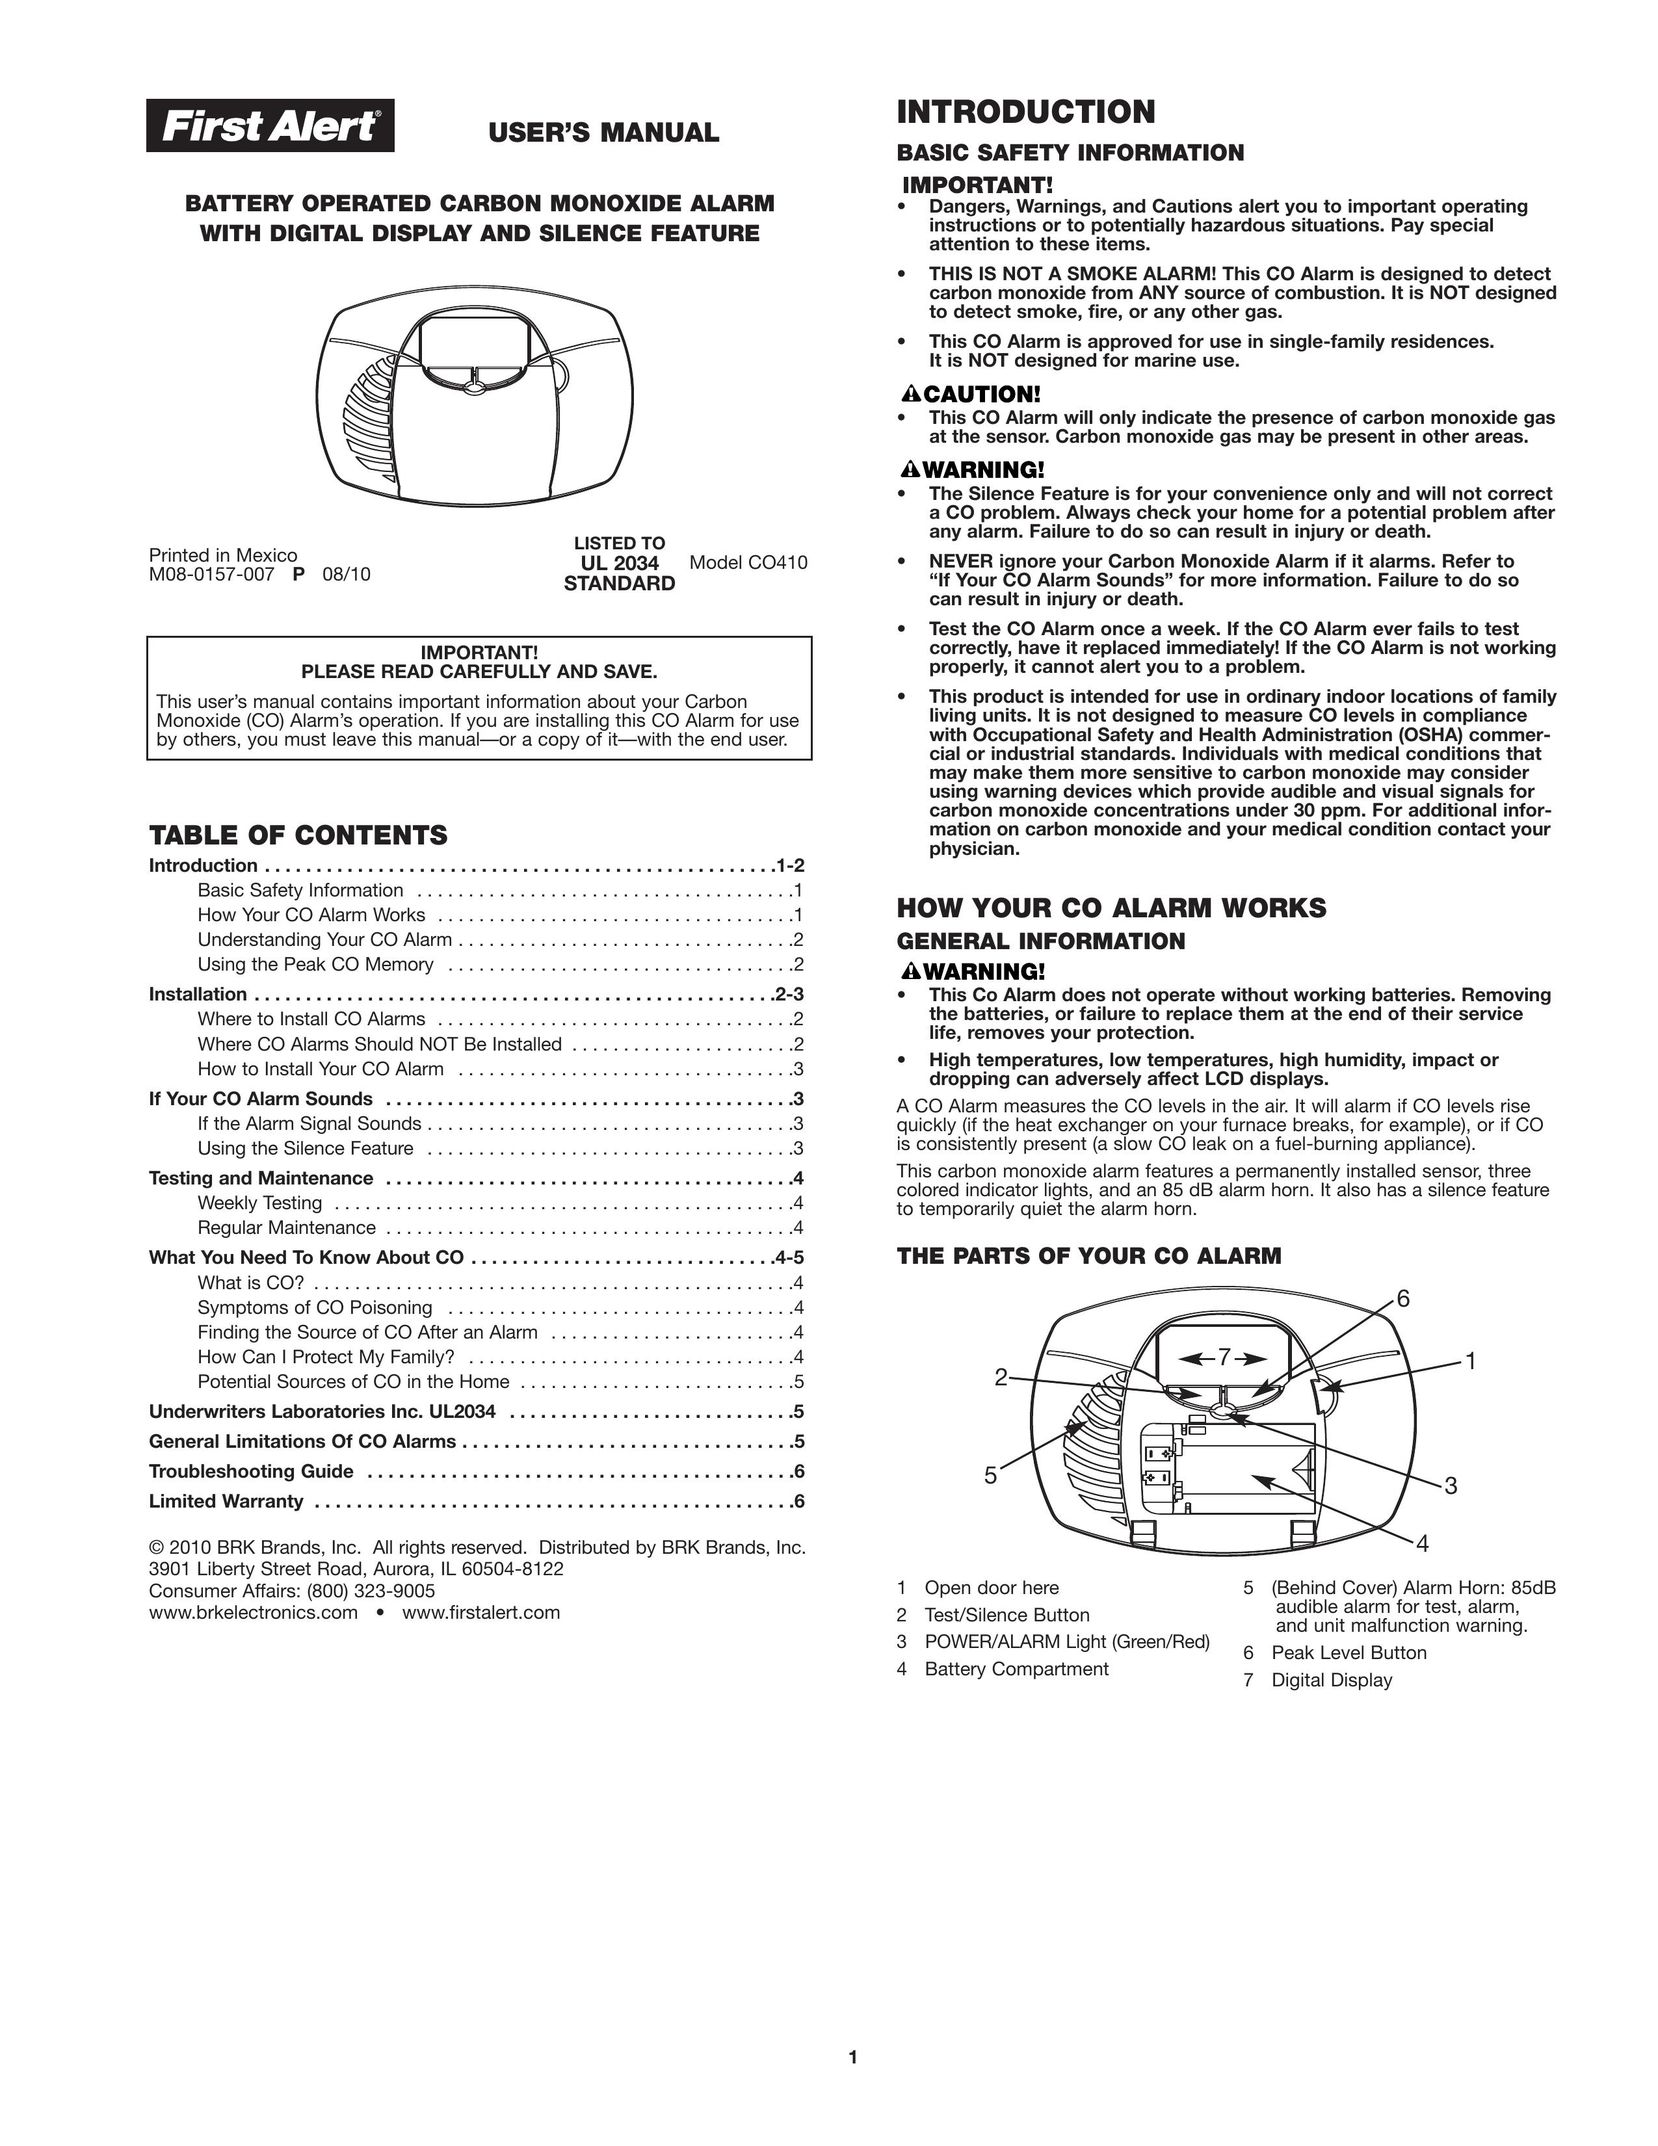 First Alert CO410 Carbon Monoxide Alarm User Manual